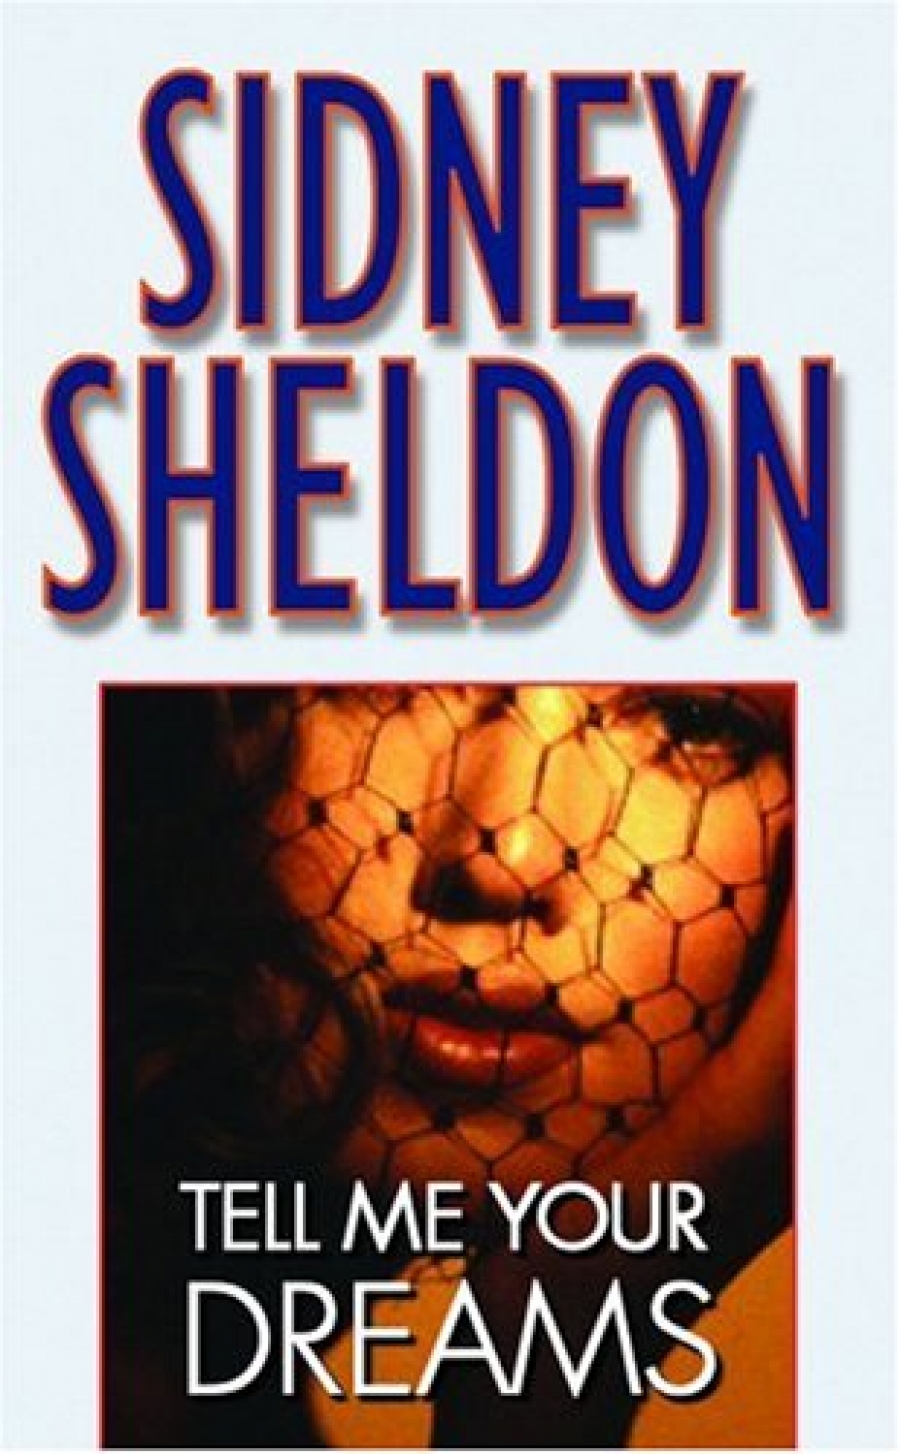 Sheldon Sidney Sheldon Tell me your dreams 